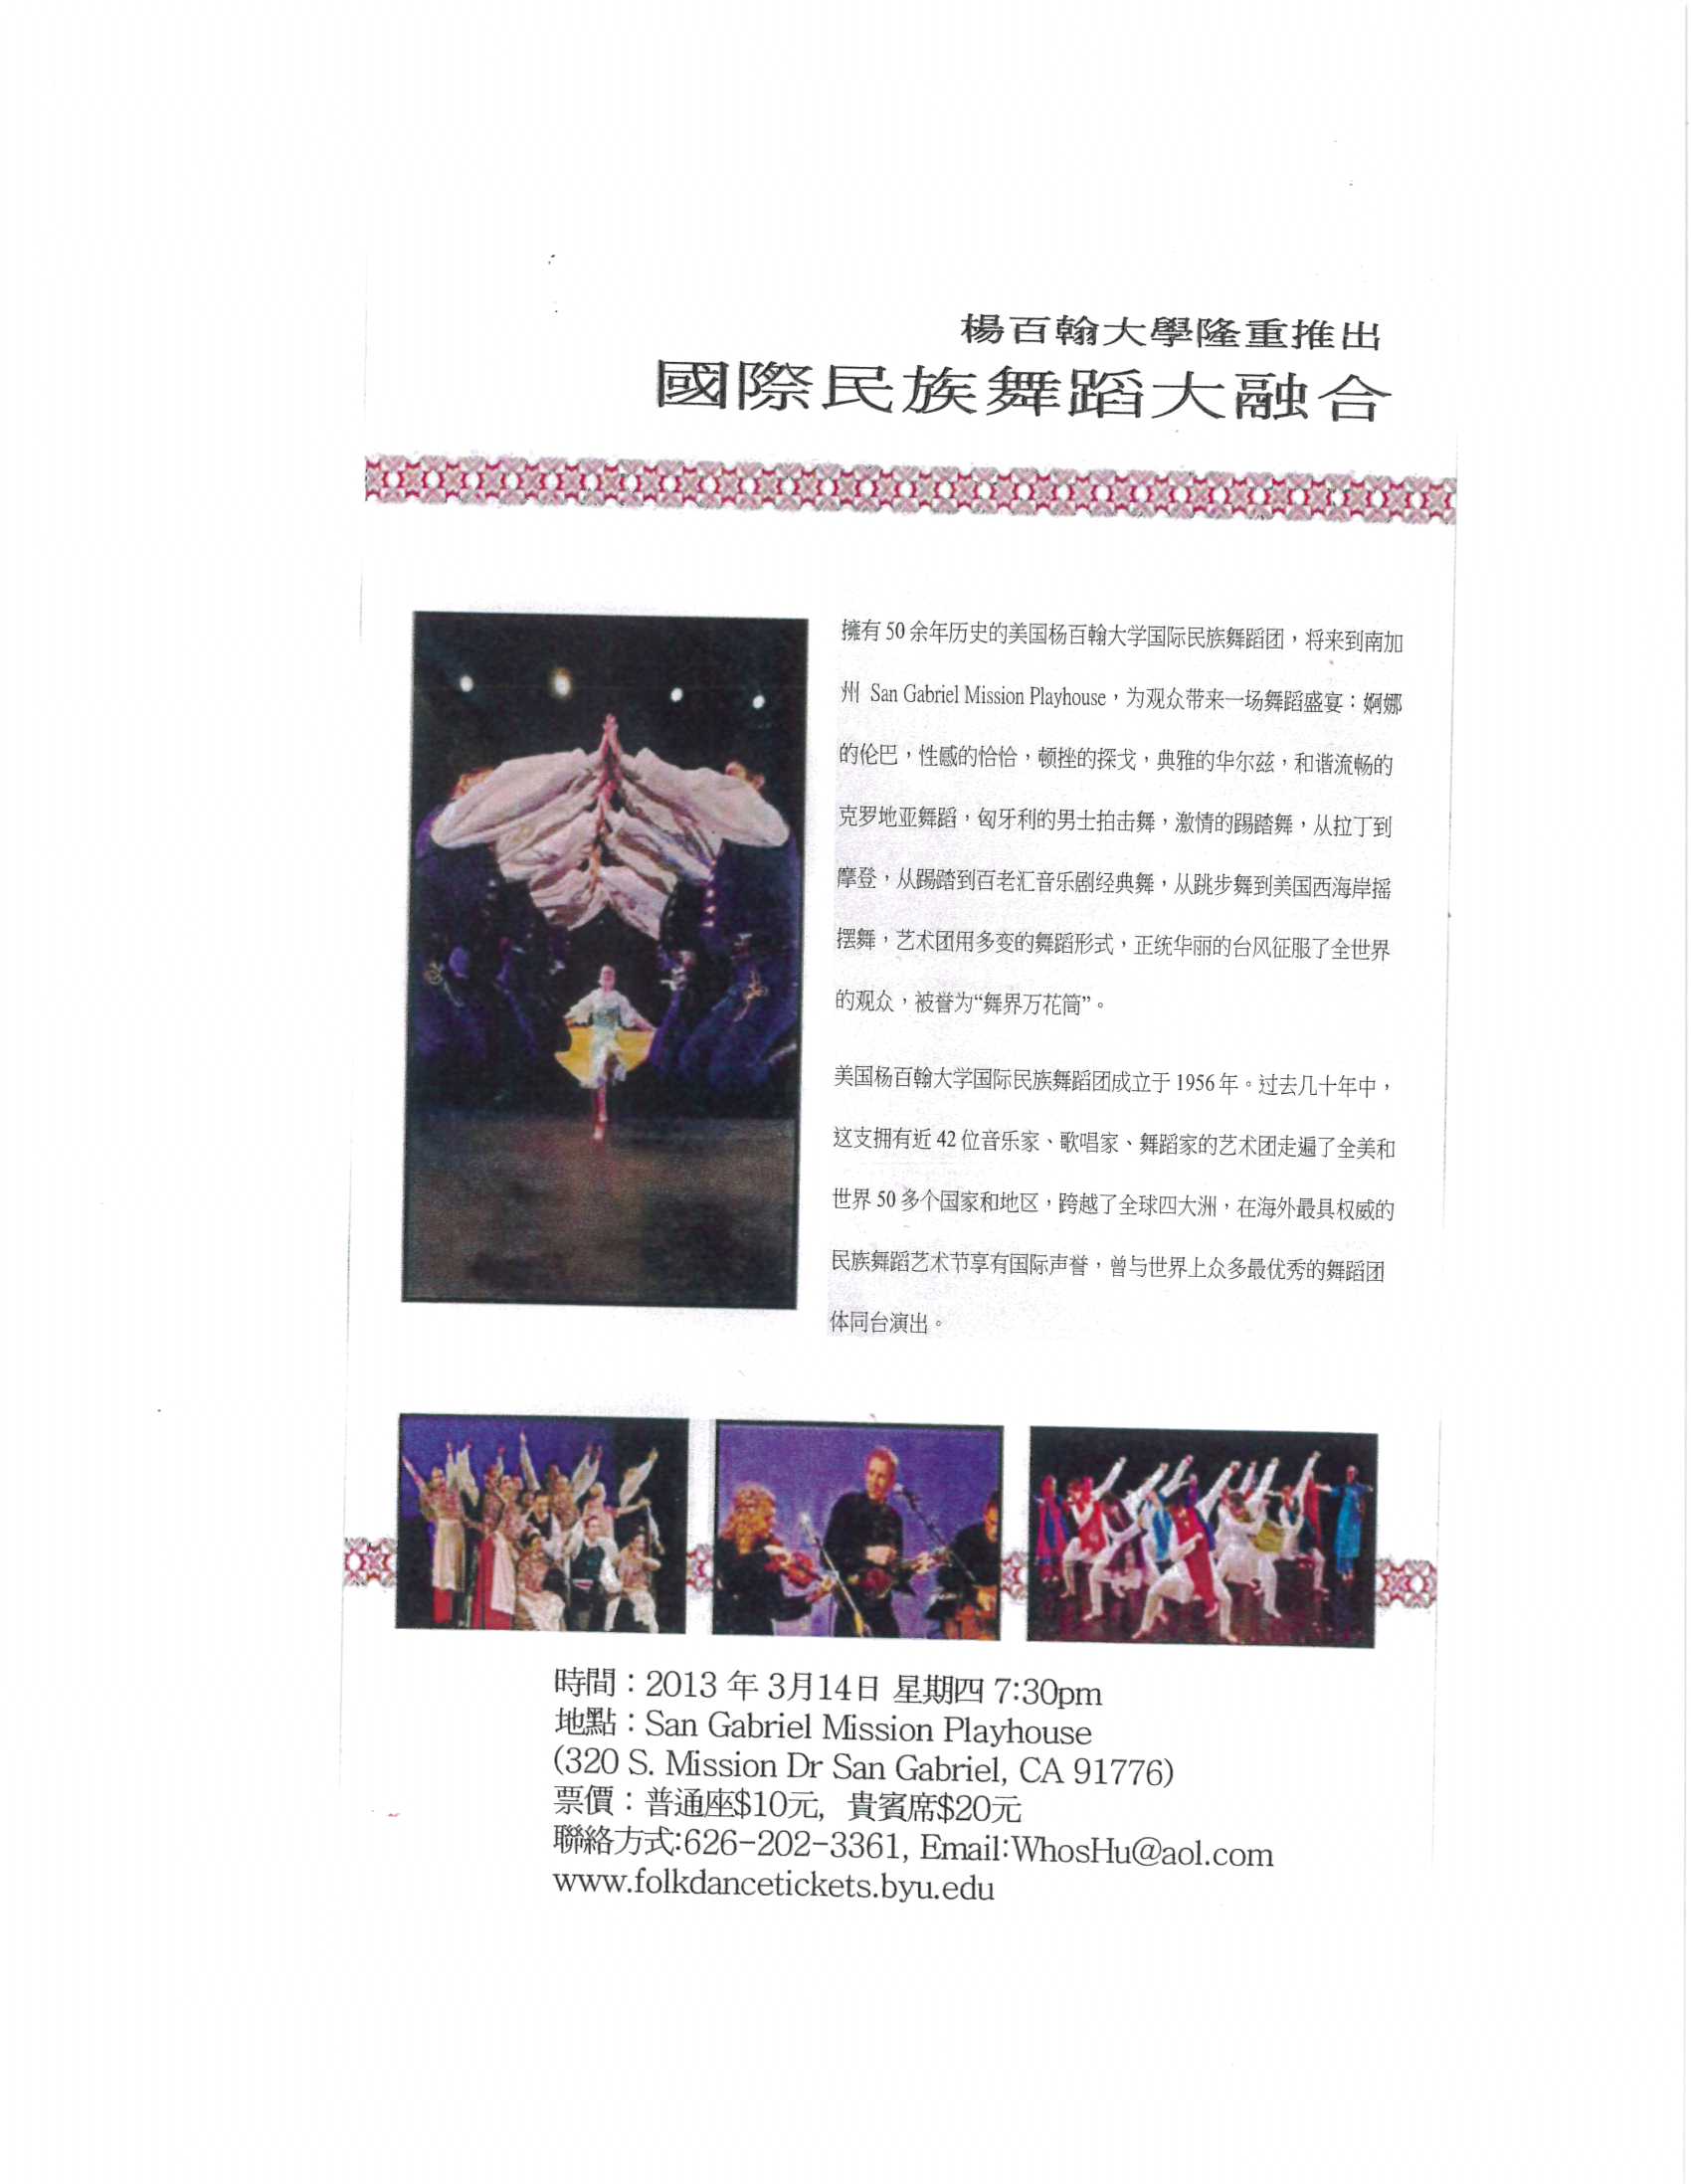 YangBaiHan Performance-031413_Page_2.jpg